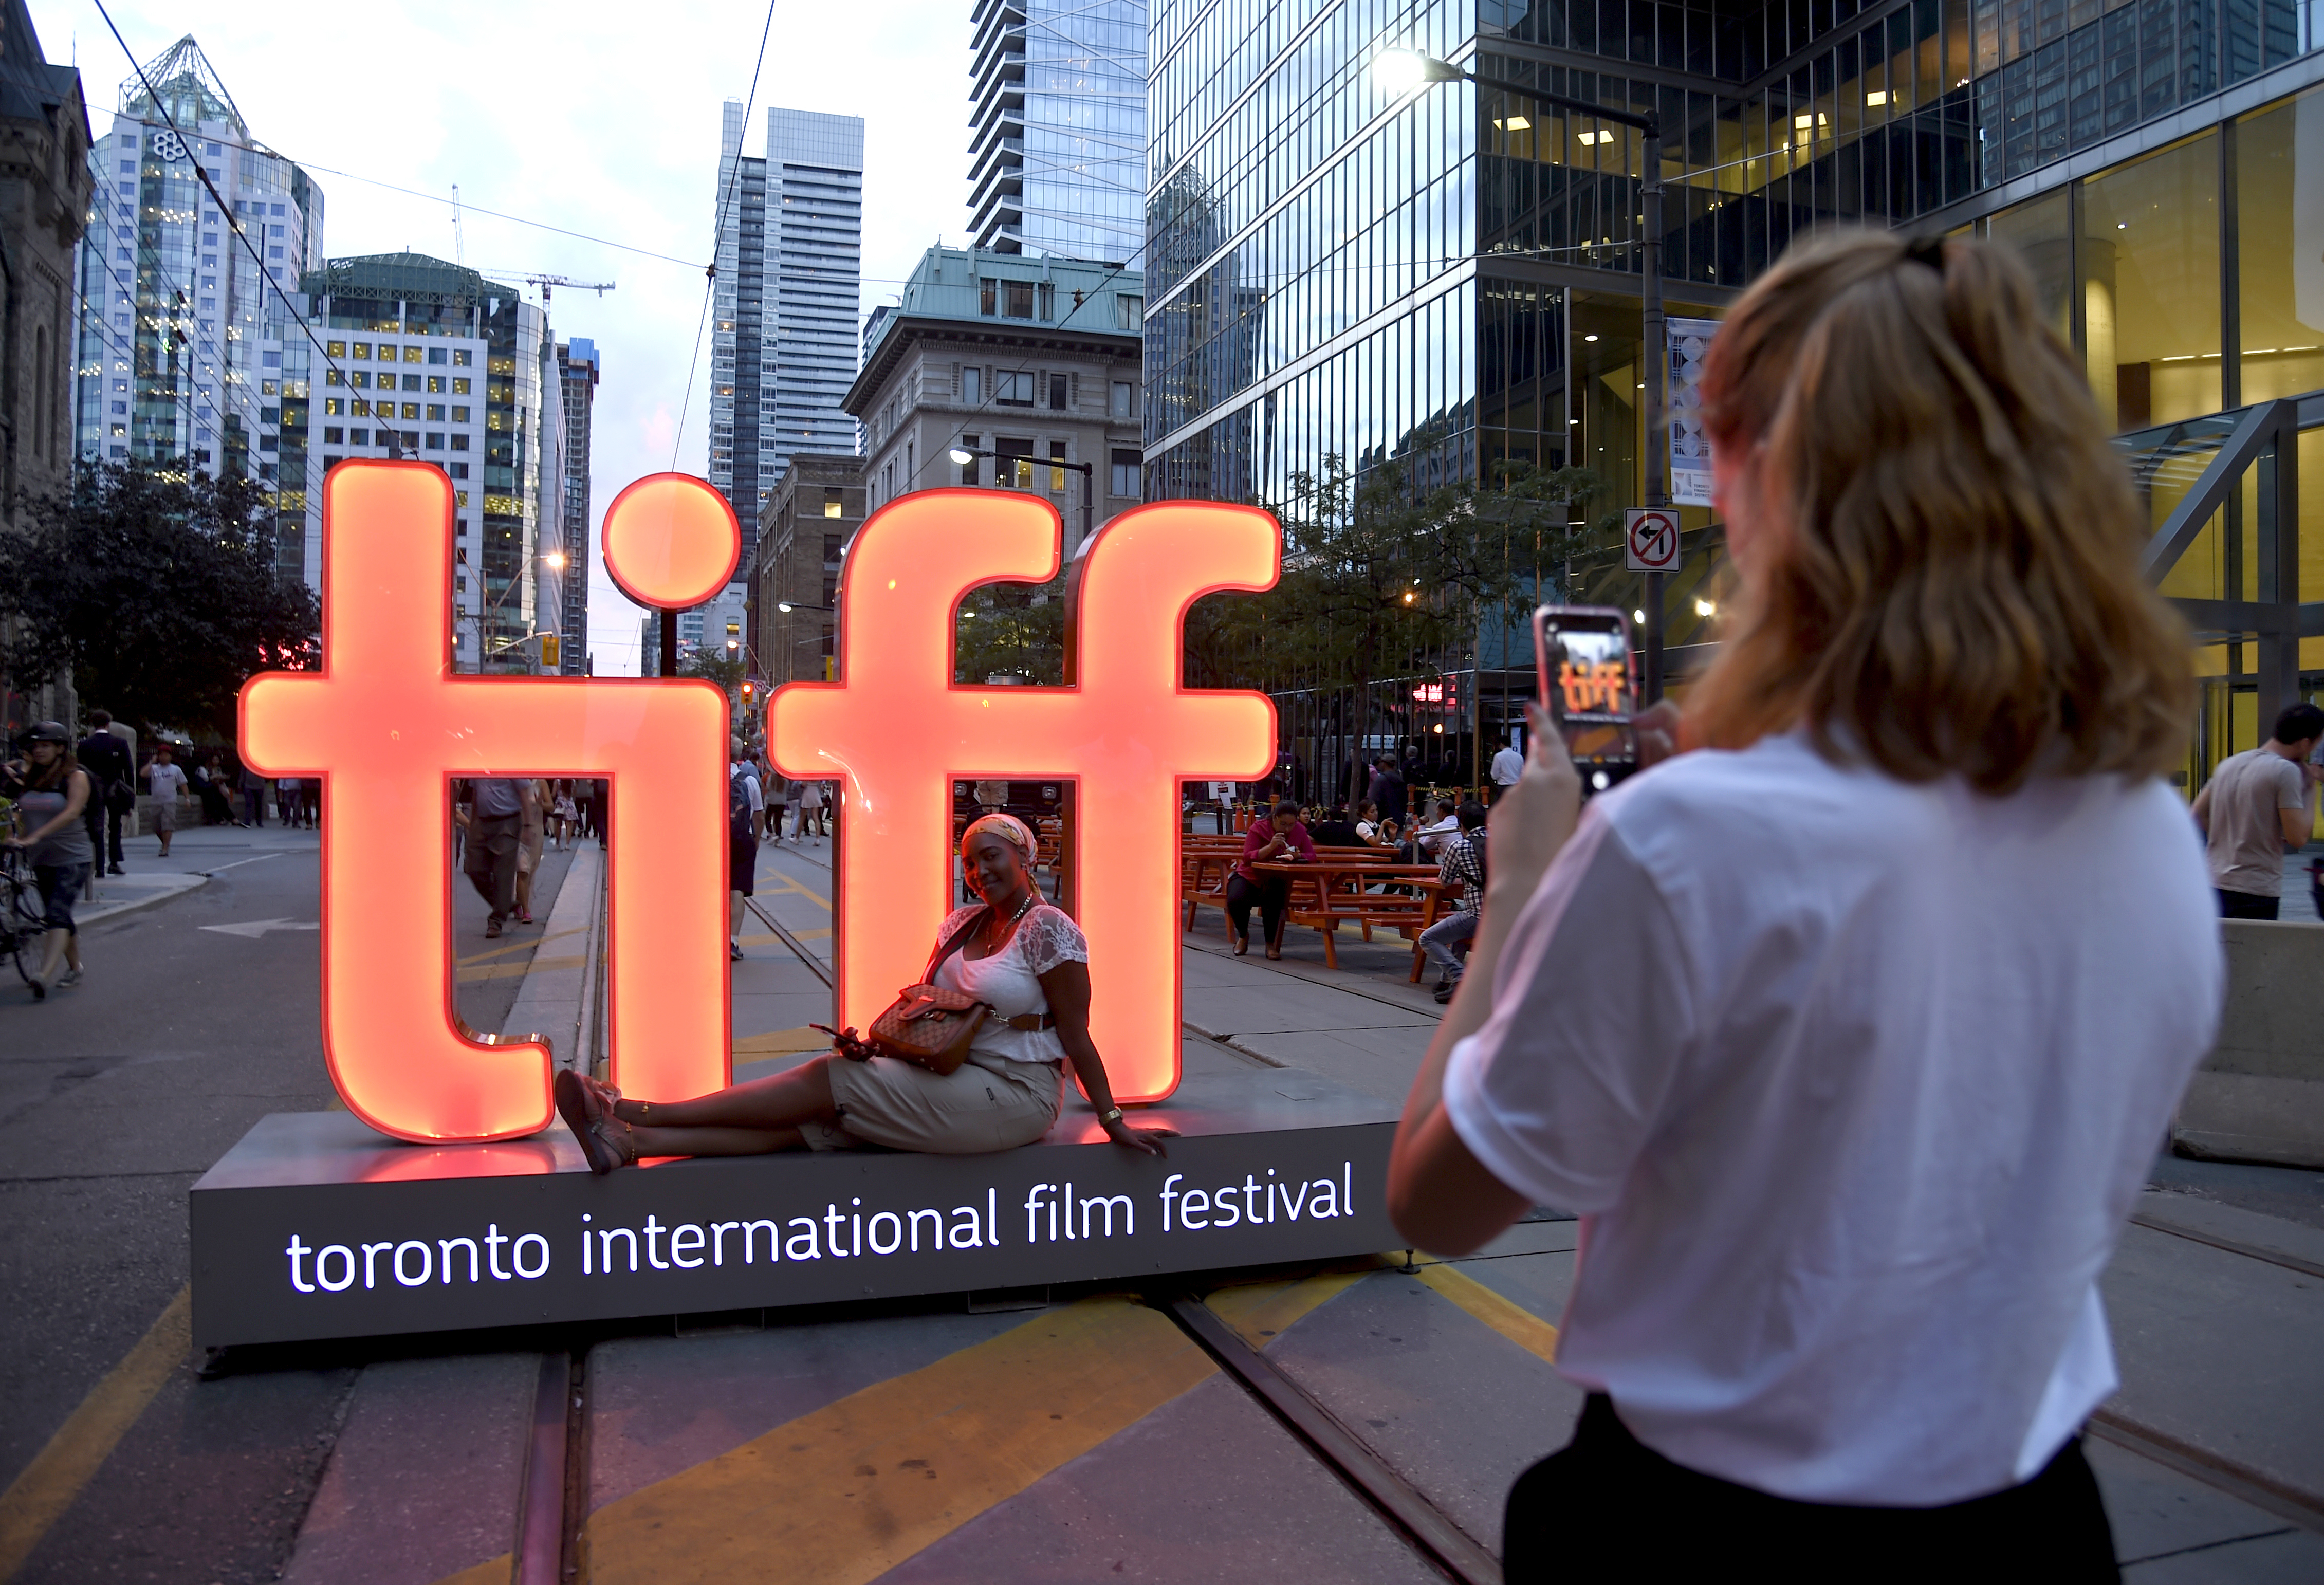 At Toronto Film Festival, 'popular' was a relative term Inquirer